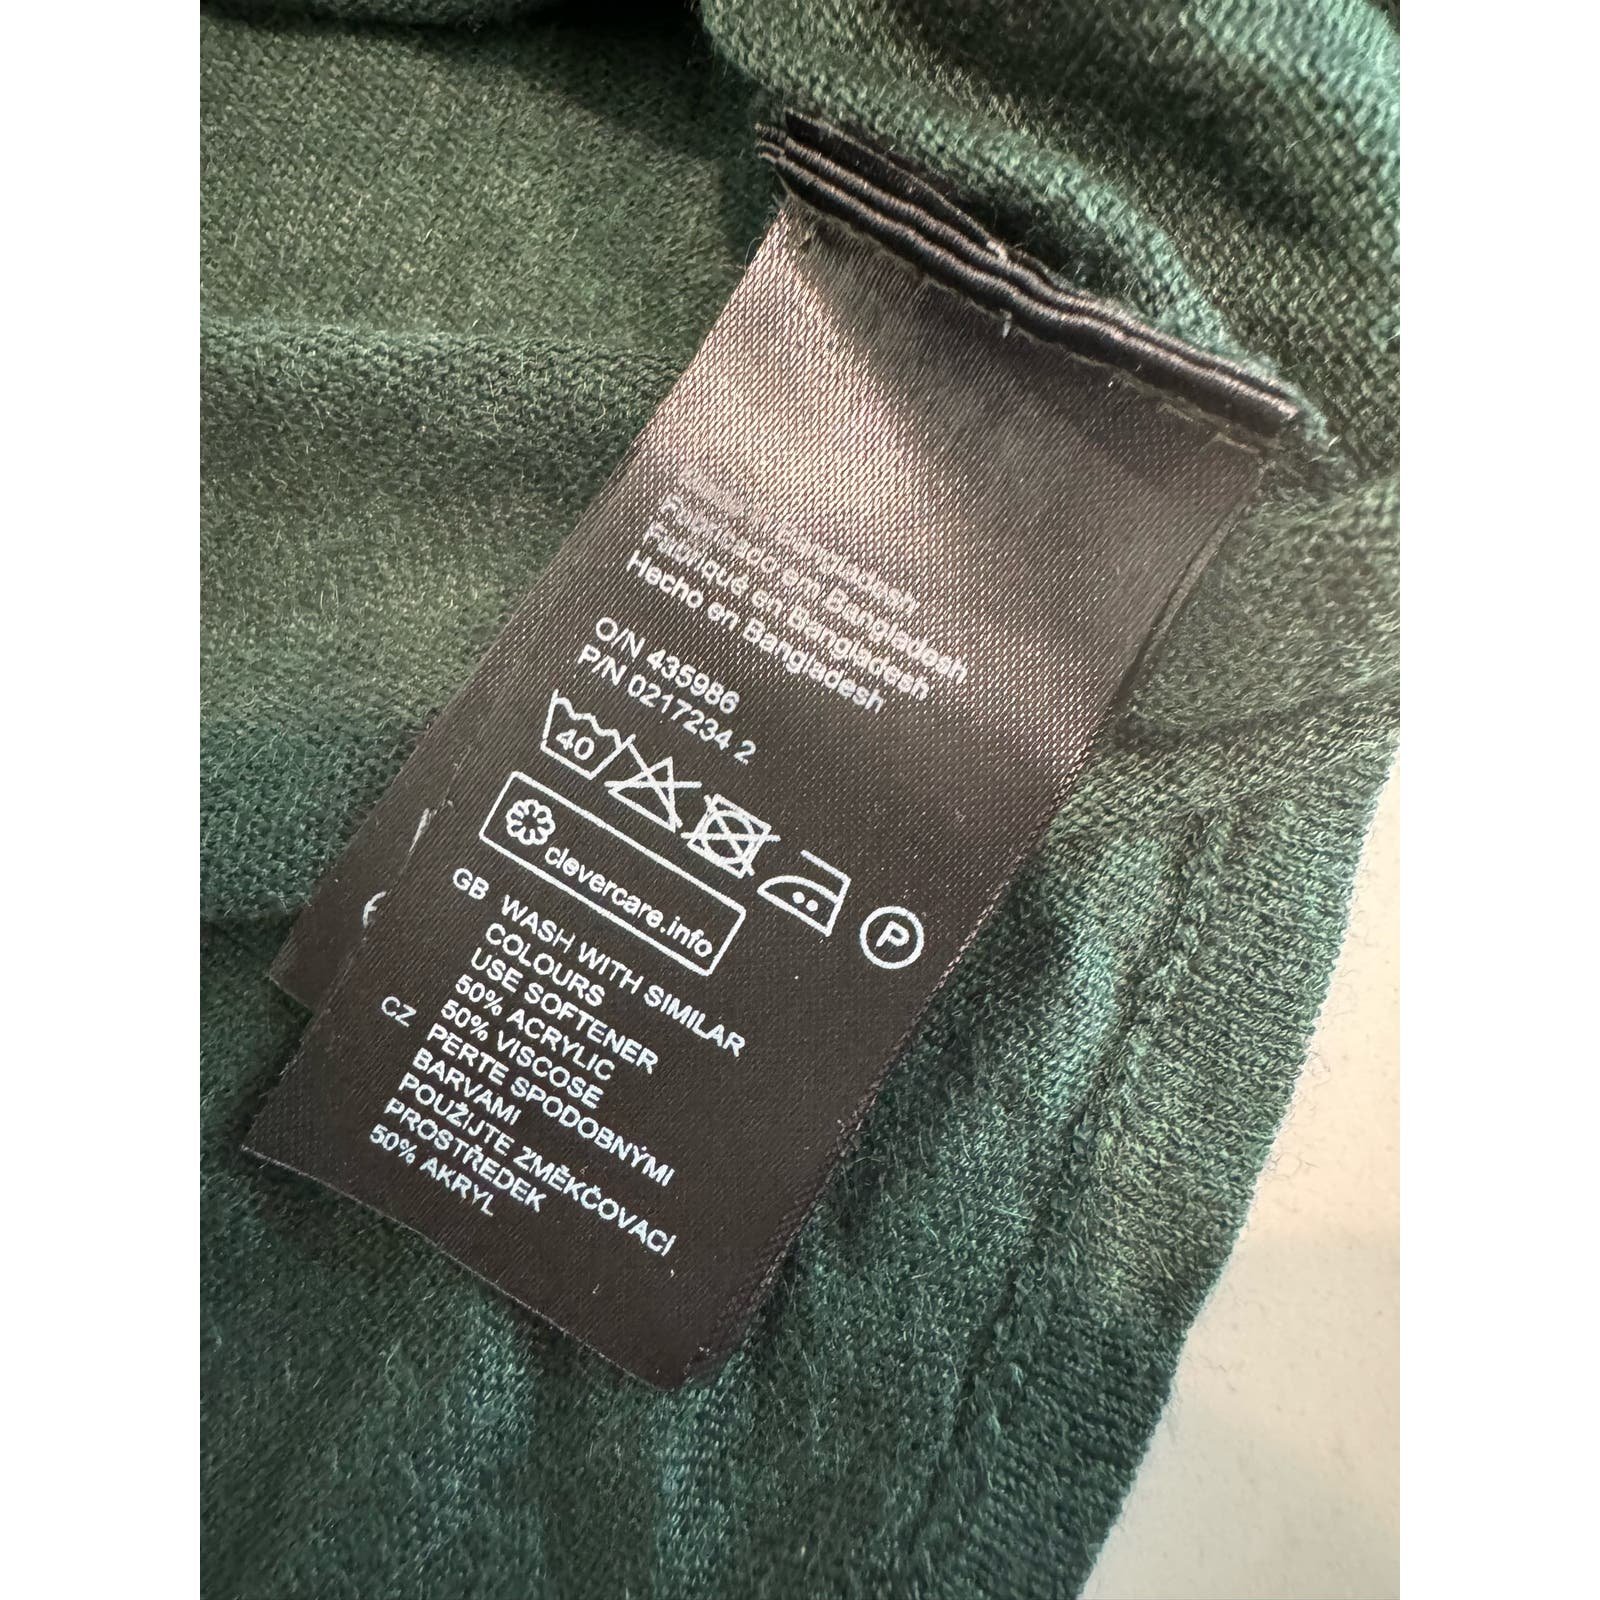 Wholesale price H&M Women´s Long-Sleeve Green Shirt Size XL LOgawGfPp Buying Cheap